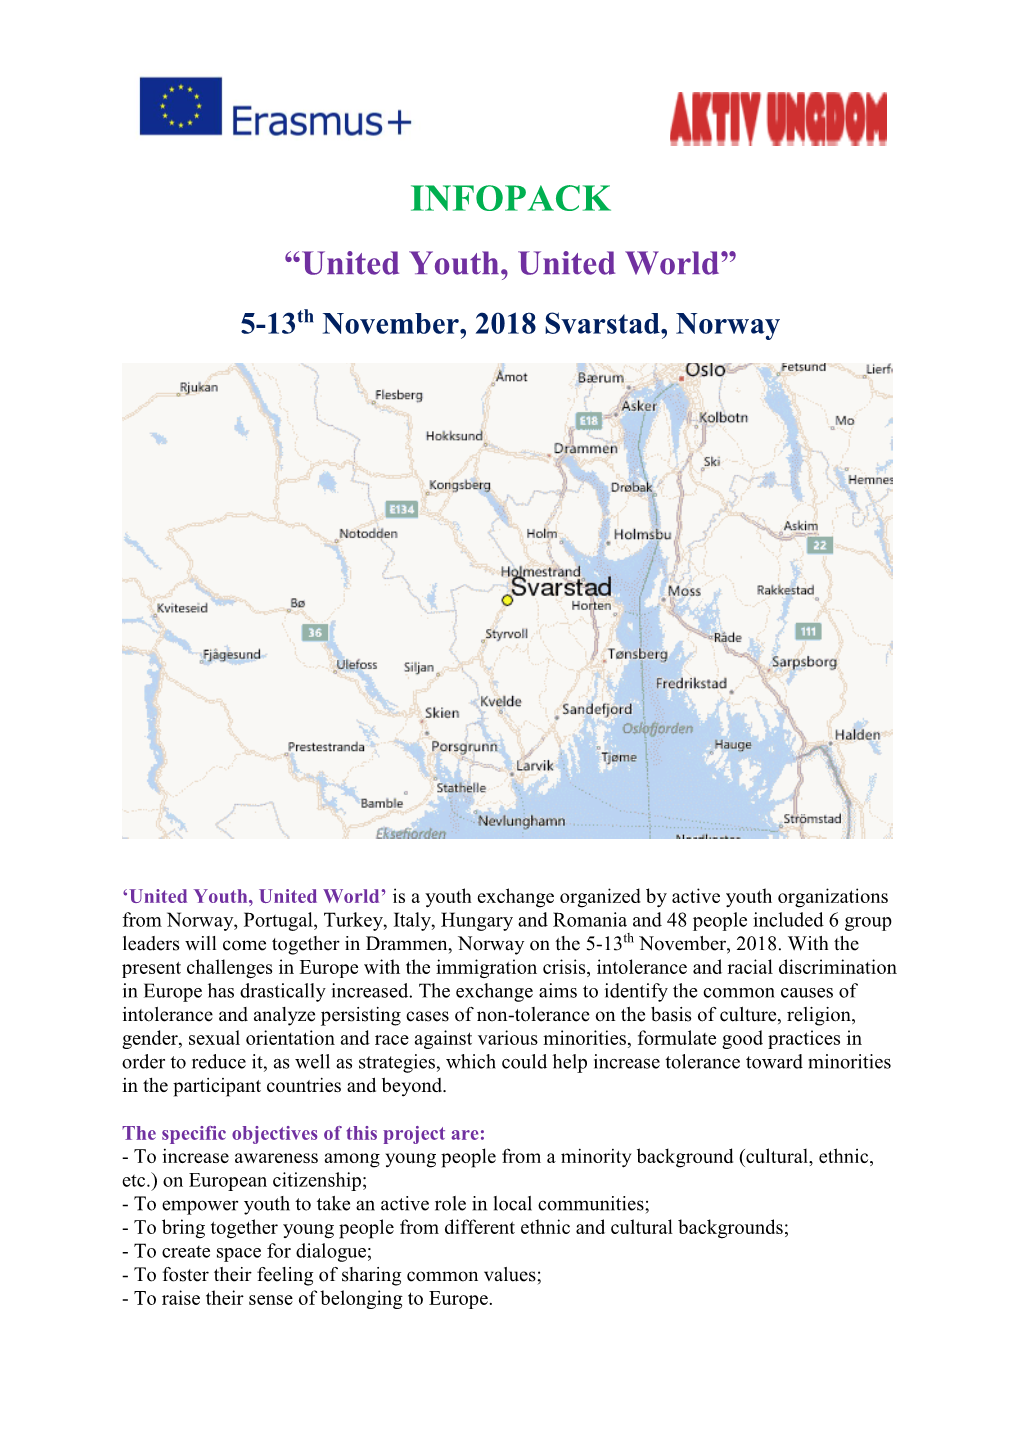 INFOPACK “United Youth, United World” 5-13Th November, 2018 Svarstad, Norway